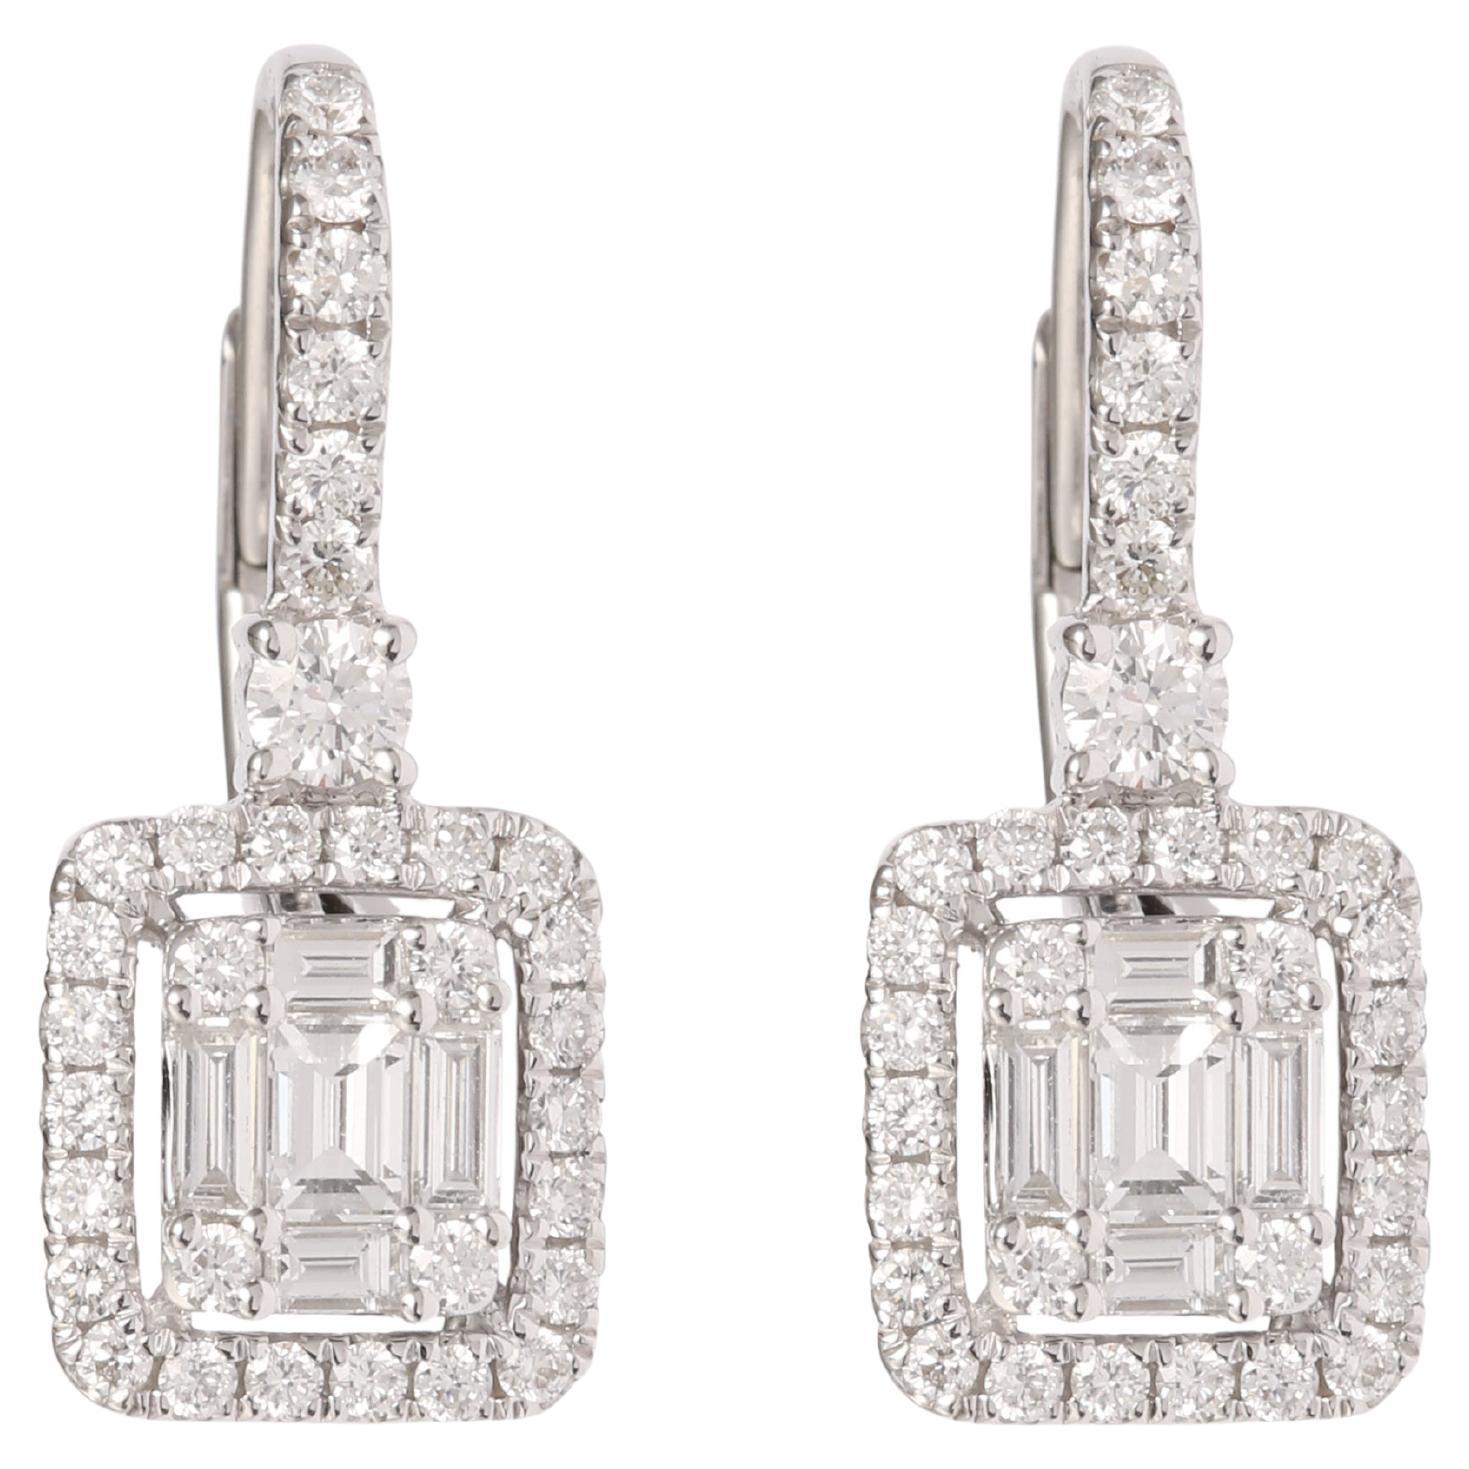 Emerald Cut Effect Diamonds 18 Carat White Gold Earrings